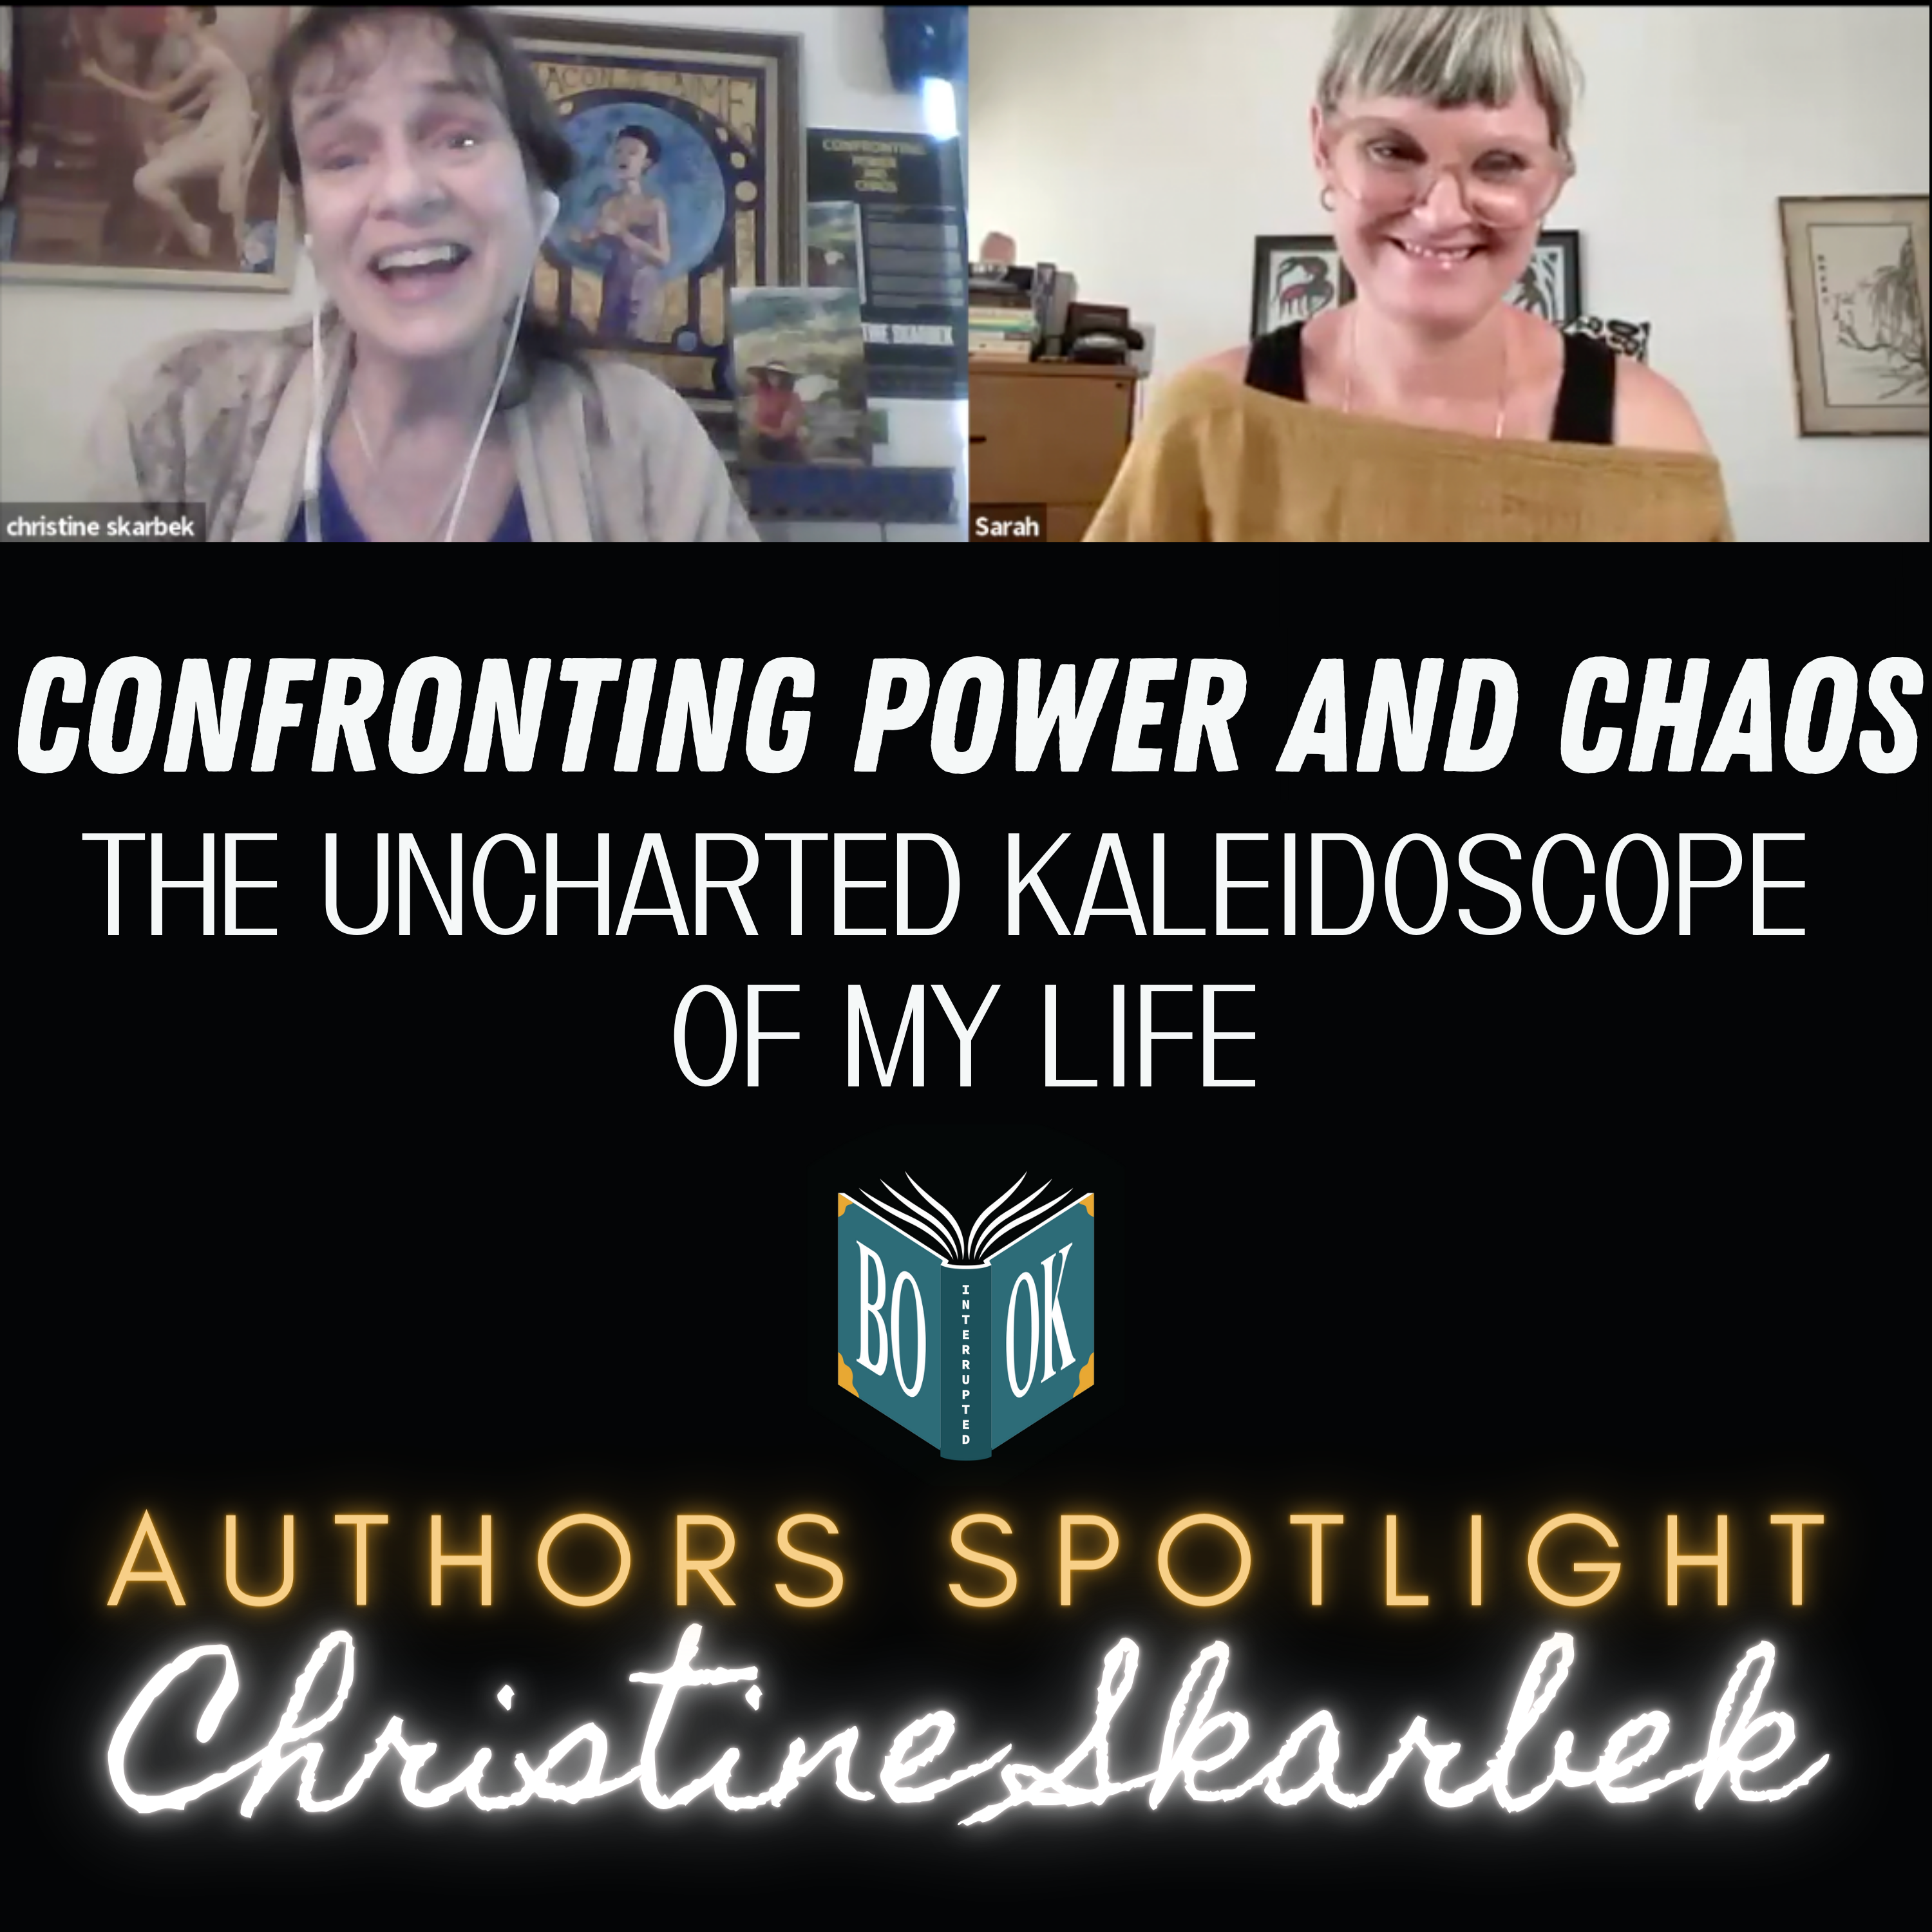 Authors Spotlight with Christine Skarbek